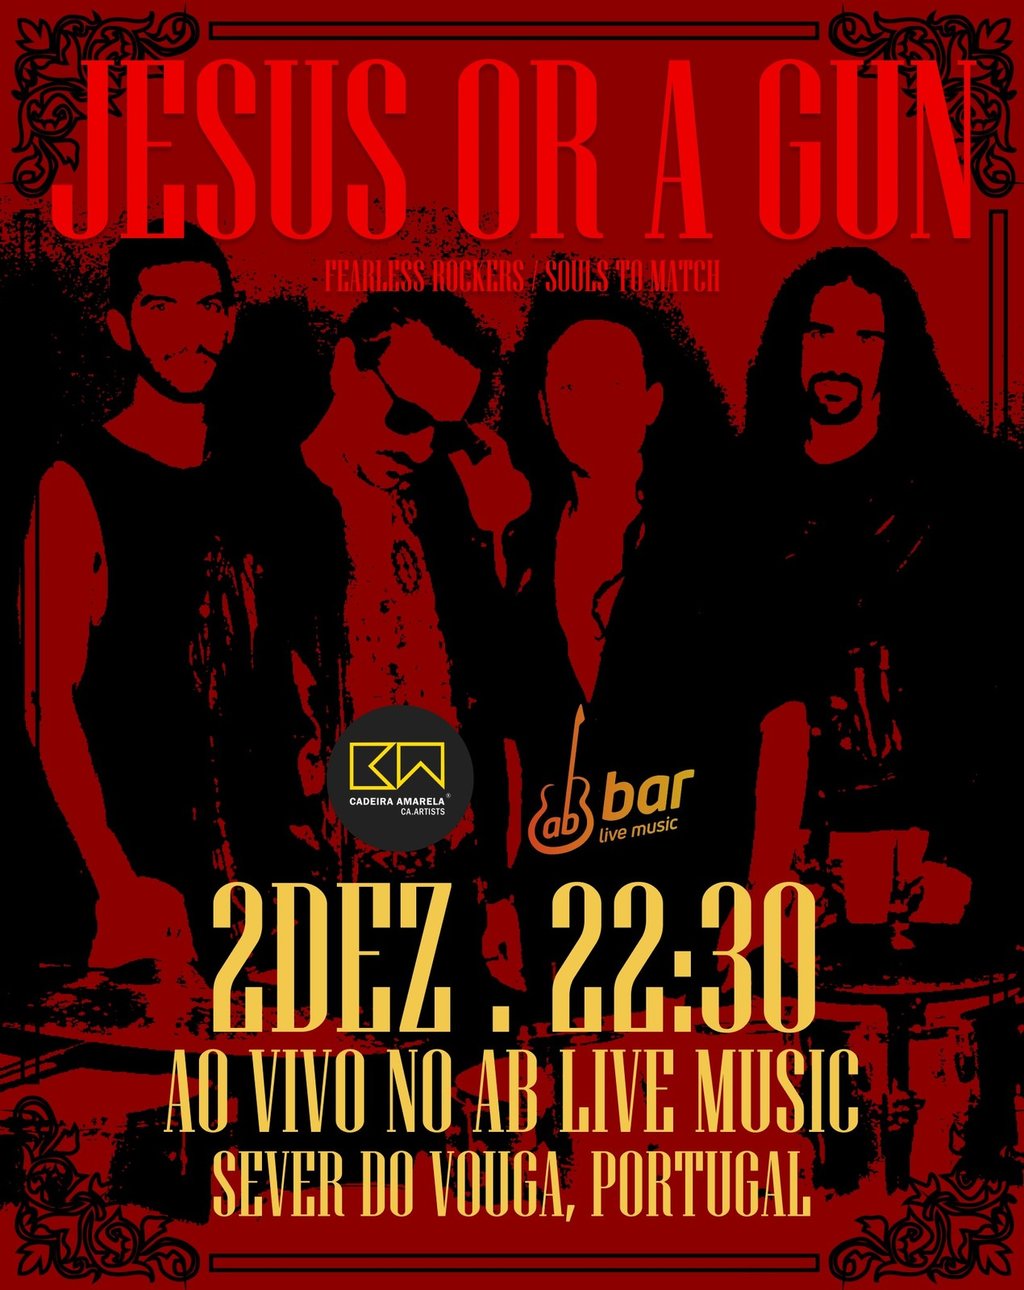 2 dez - AB Bar Live Music - Musica ao Vivo - Jesus or a Gun